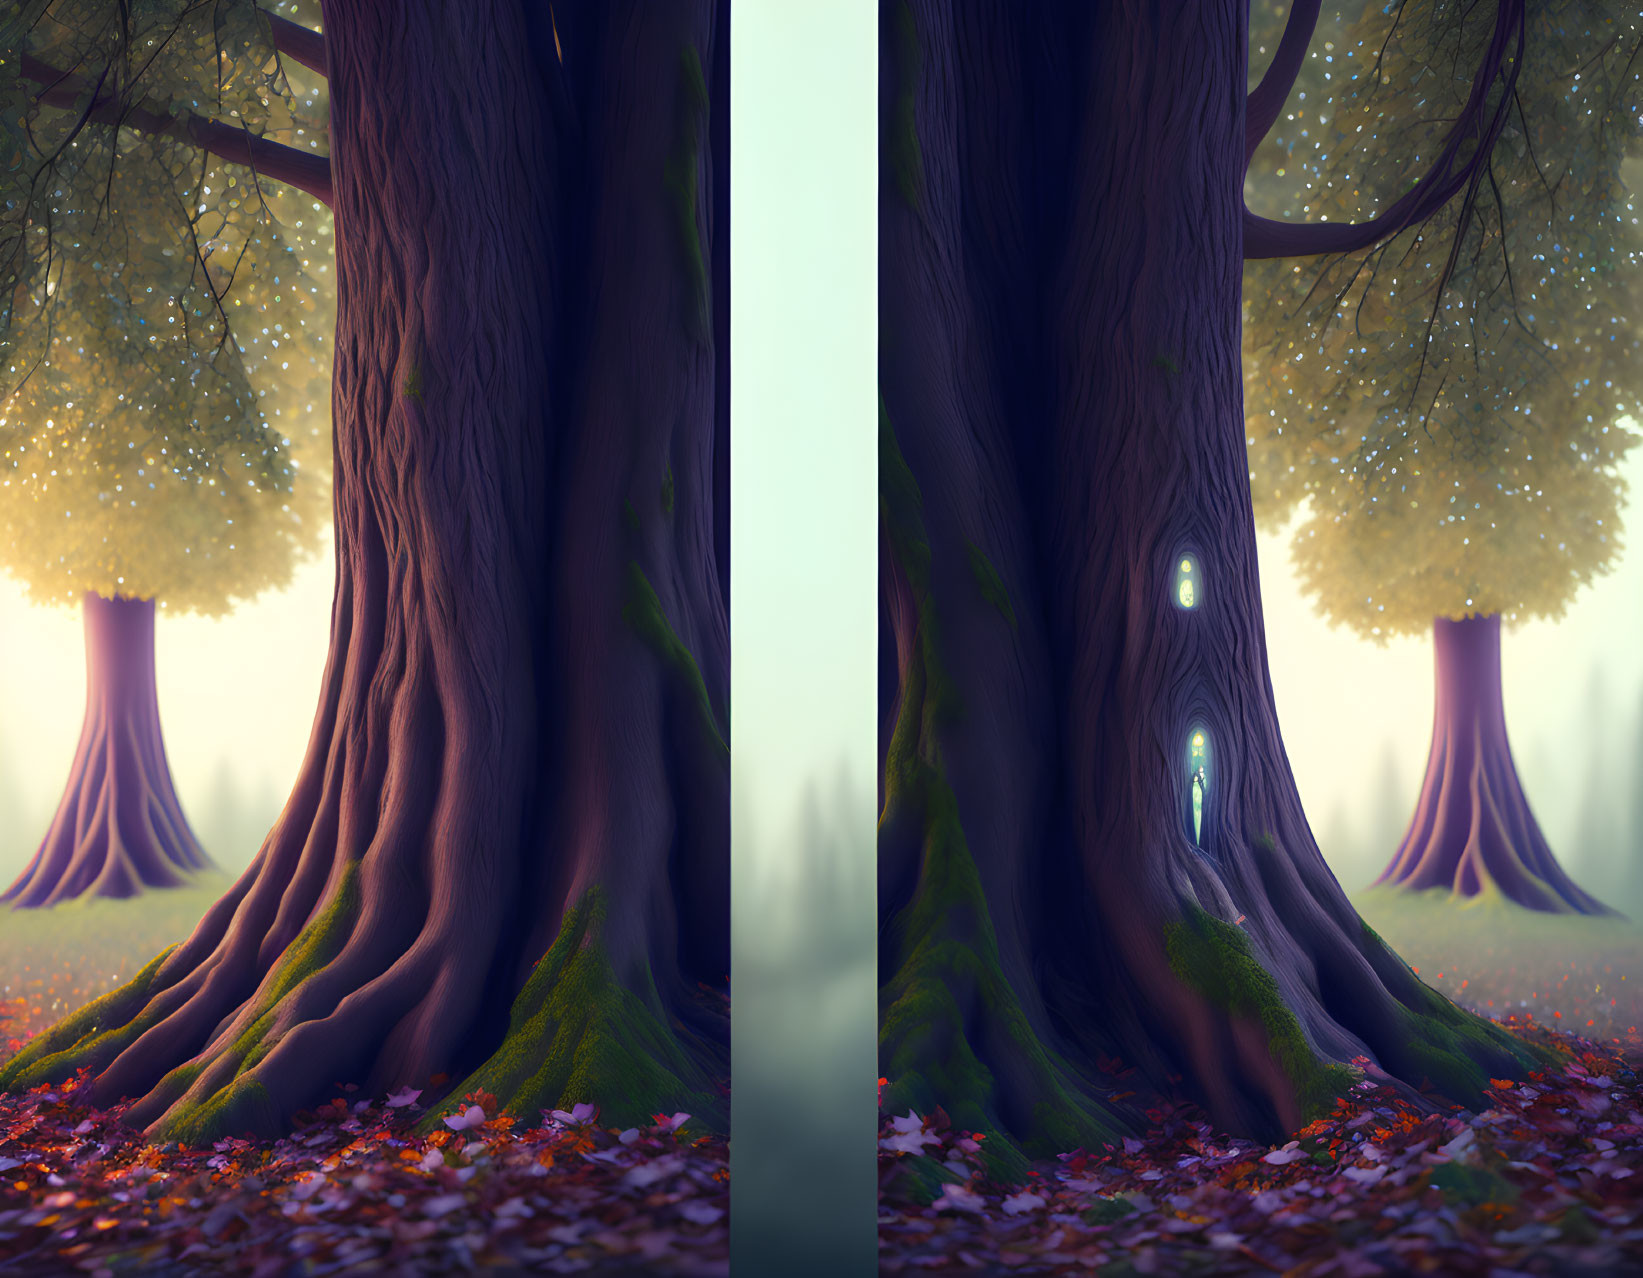 Split Image: Detailed Tree Bark in Misty Forest, Seasons Contrast